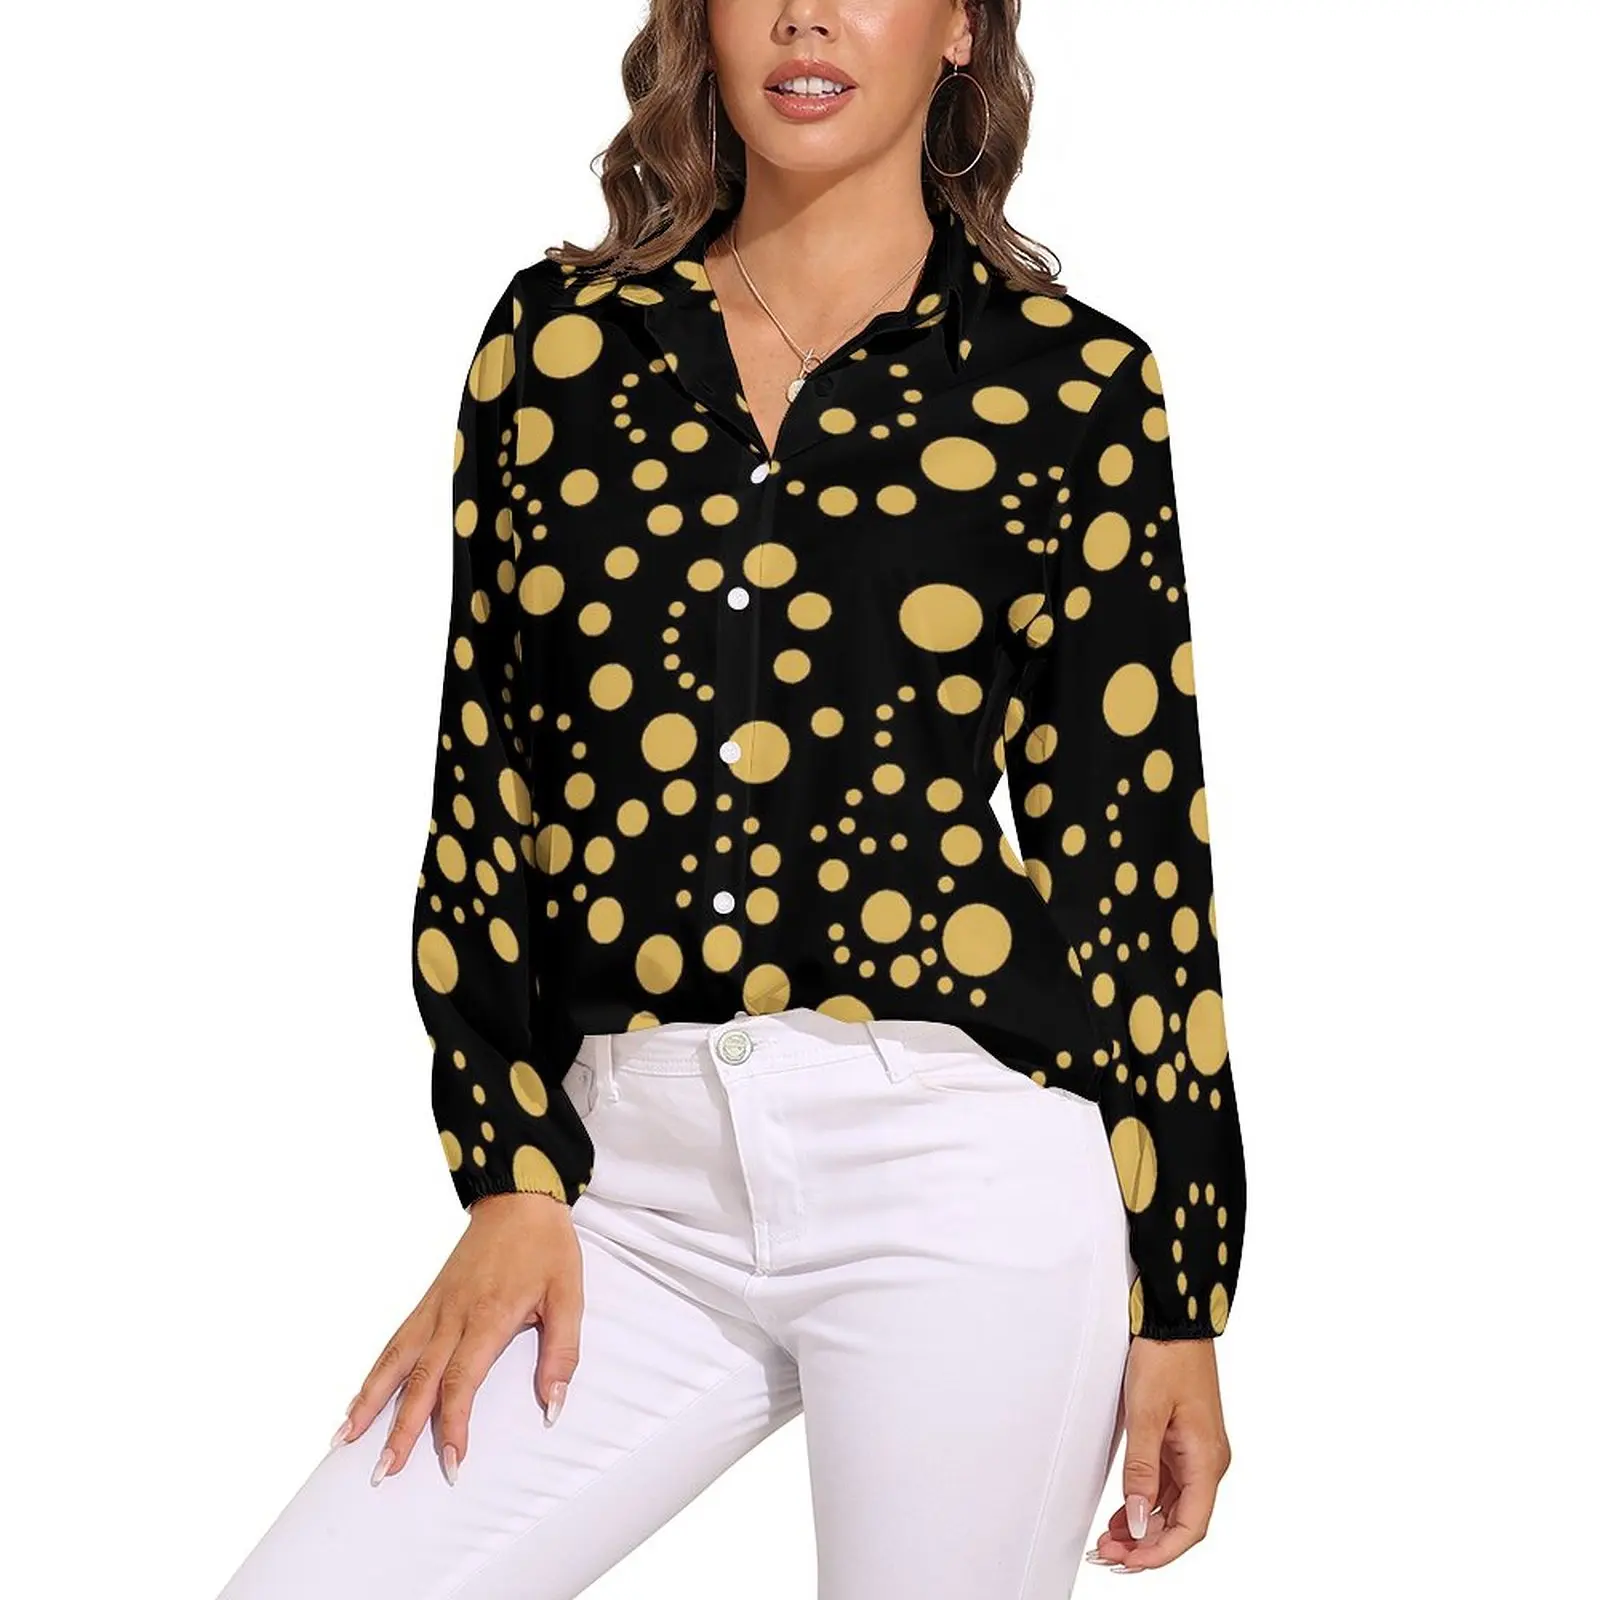 

Gold Dot Blouse Long-Sleeve Polka Dots Kawaii Blouses Female Streetwear Oversized Shirts Design Tops Gift Idea